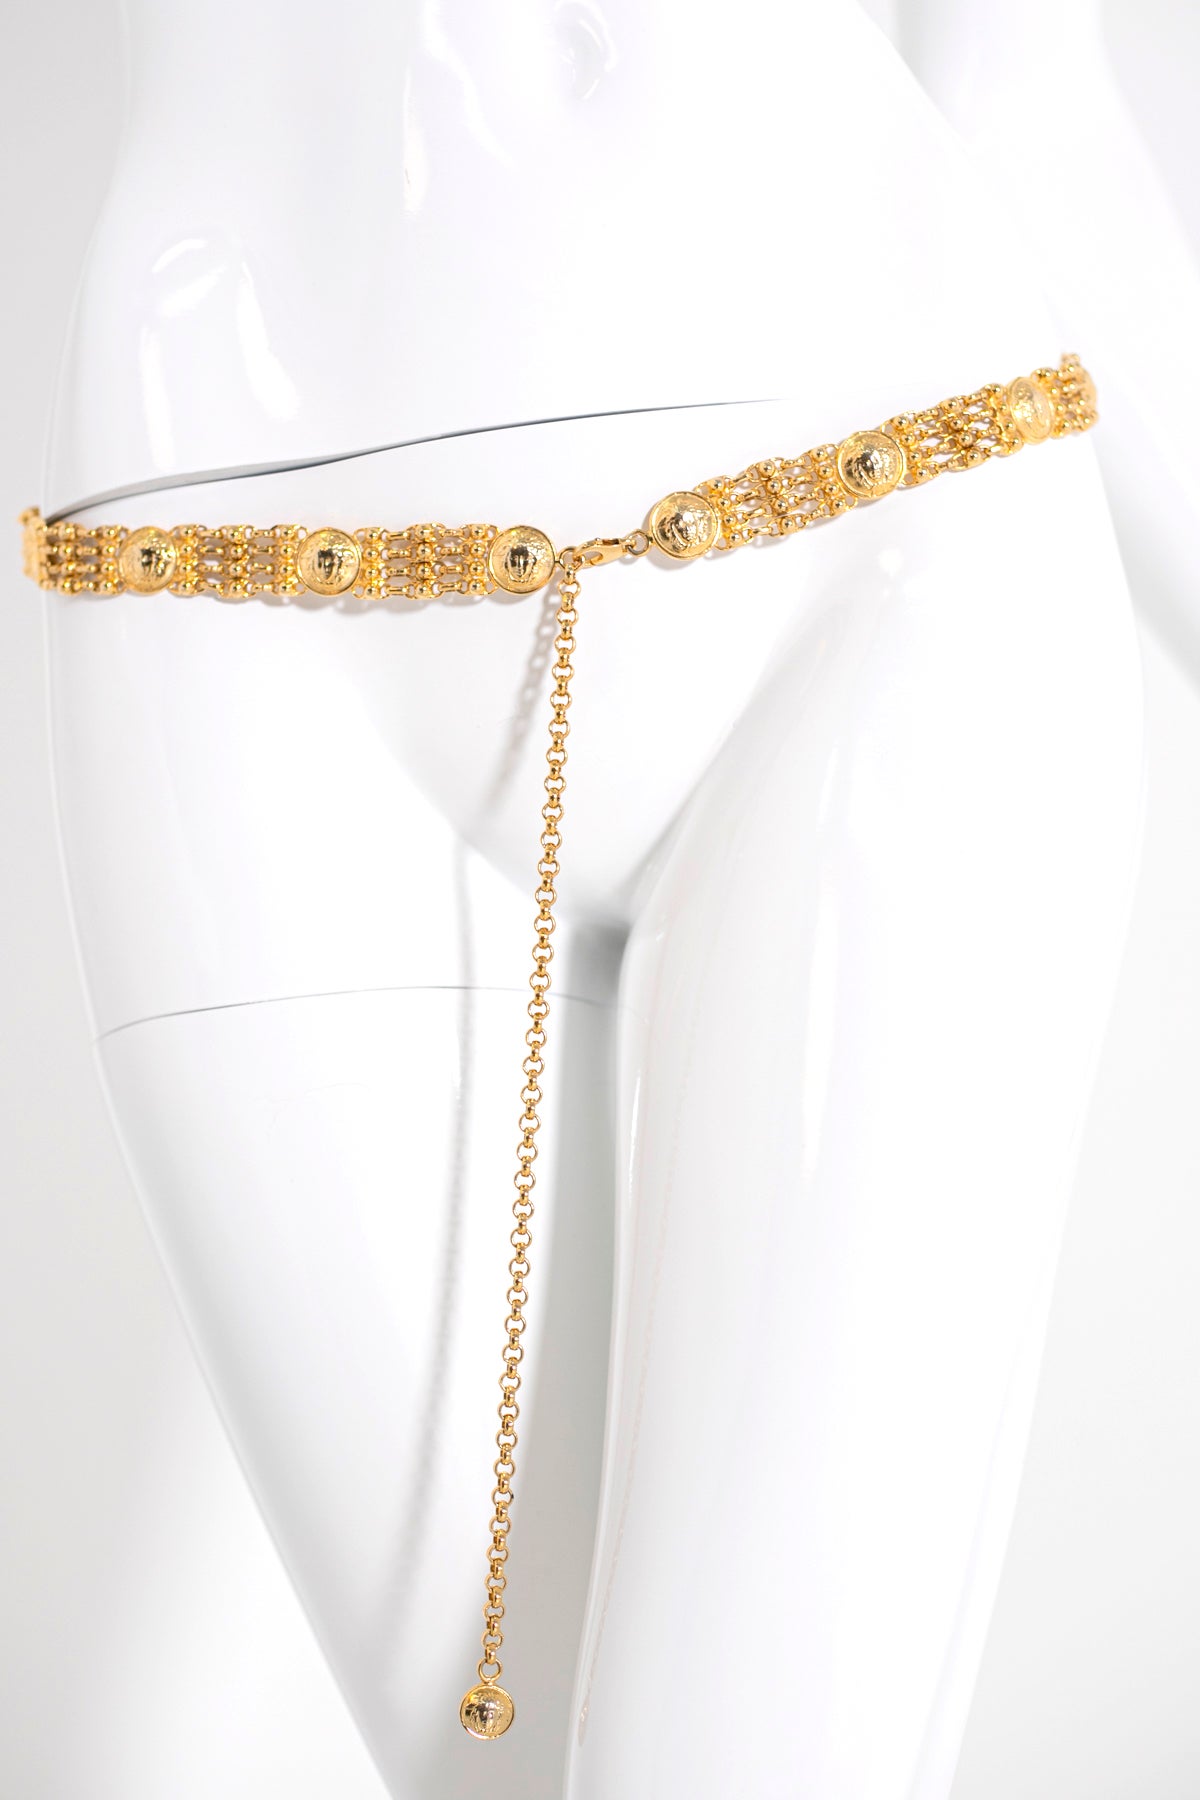 Gianni Versace Gold Medusa Belt